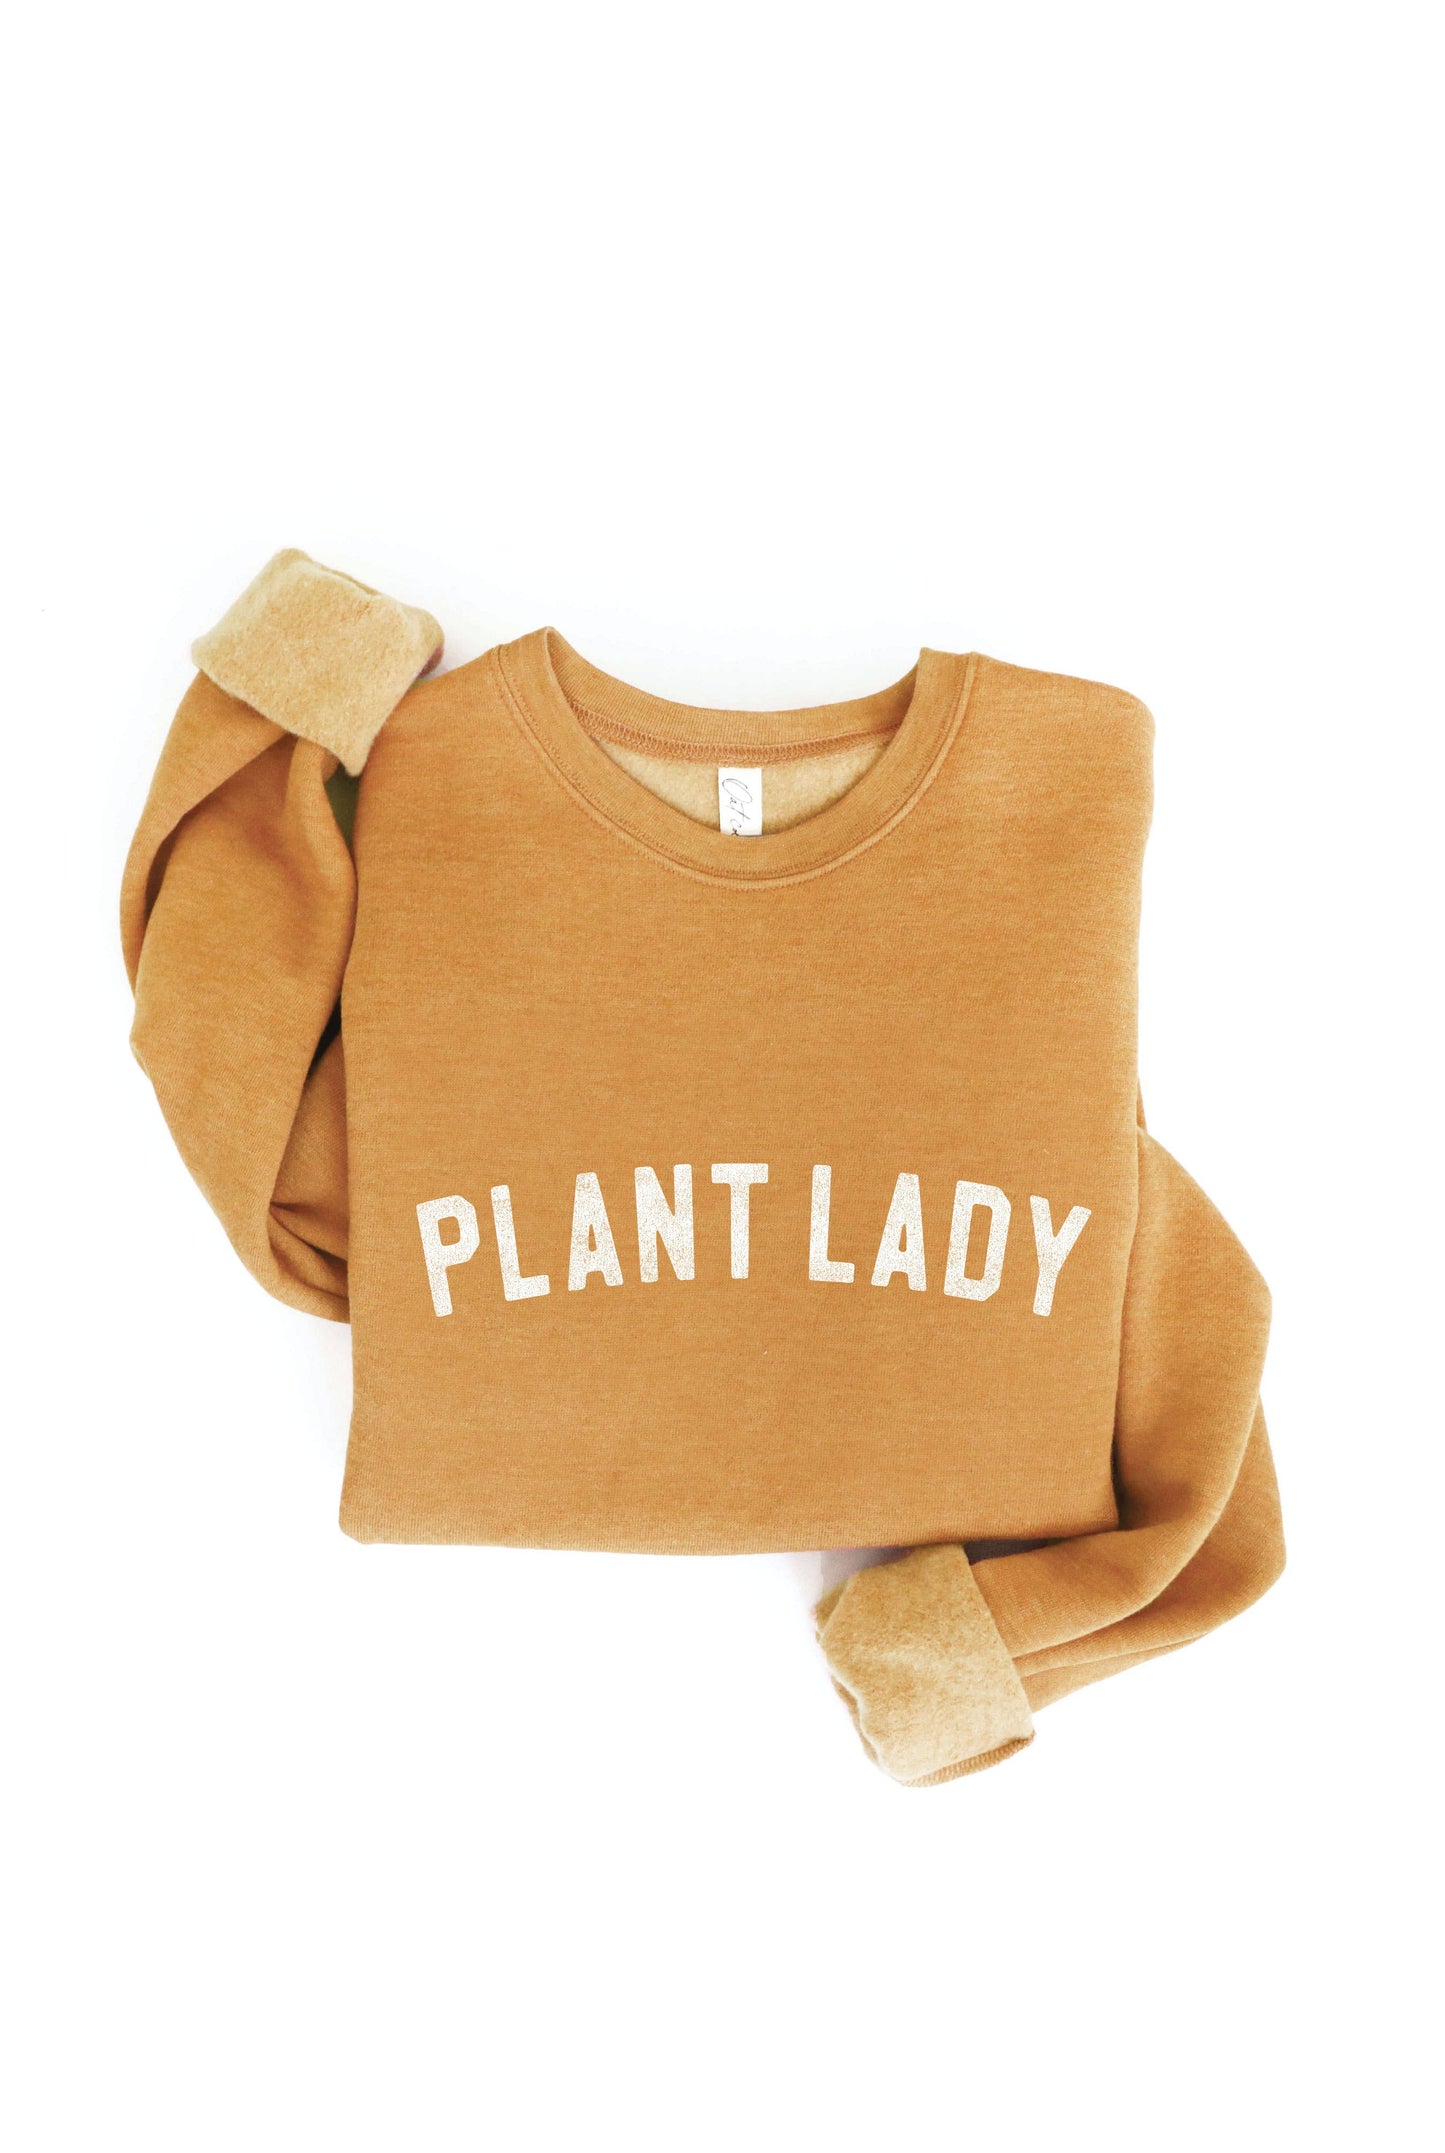 PLANT LADY Print Graphic Sweatshirt: XL / HEATHER FOREST